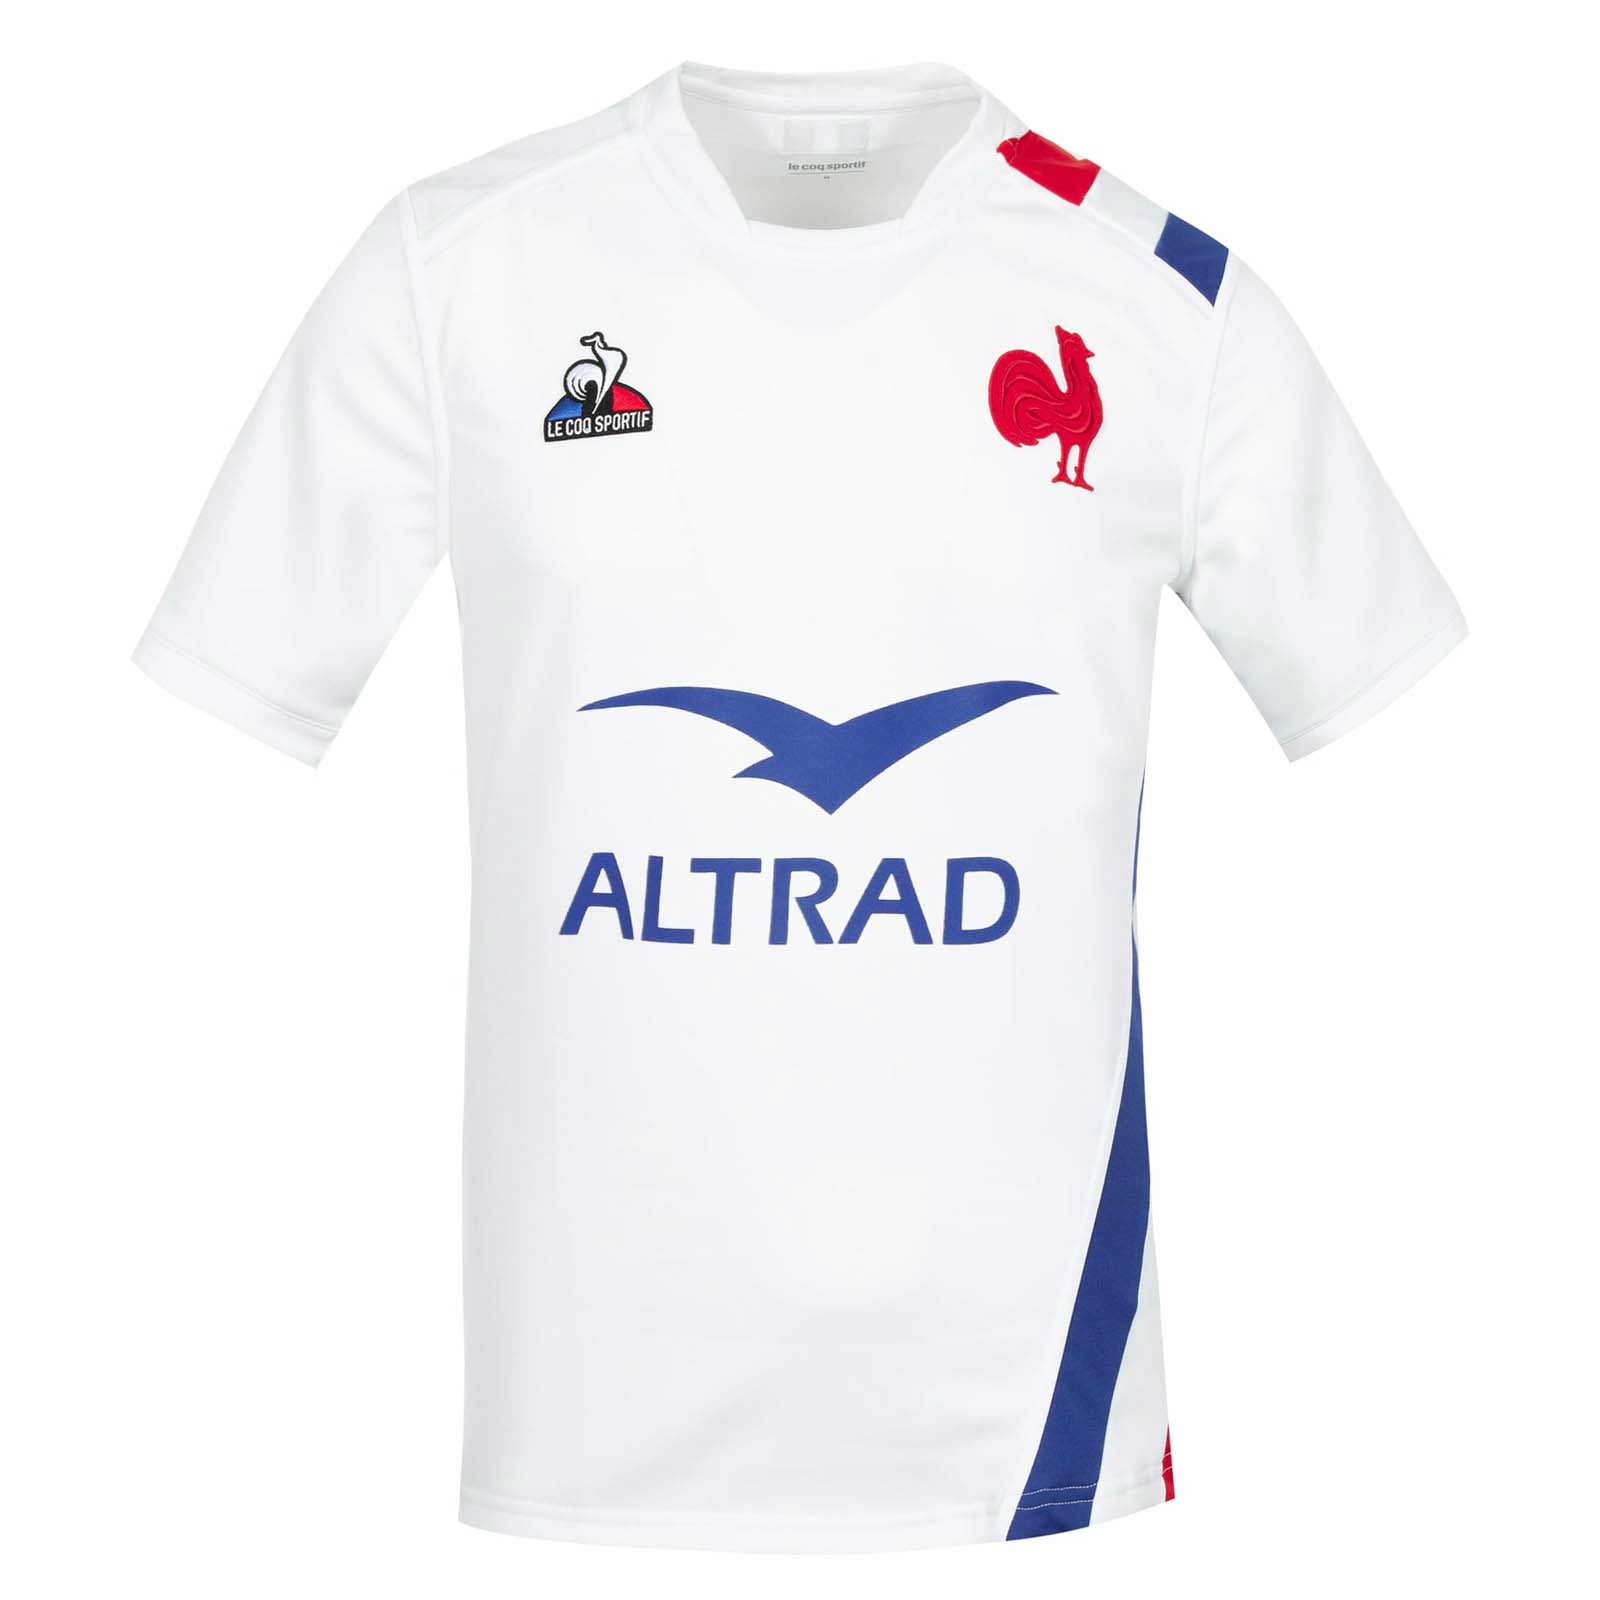 New 2020-2021 France Rugby Jersey Men's Short Sleeve Tshirt Size:S-XXXL 